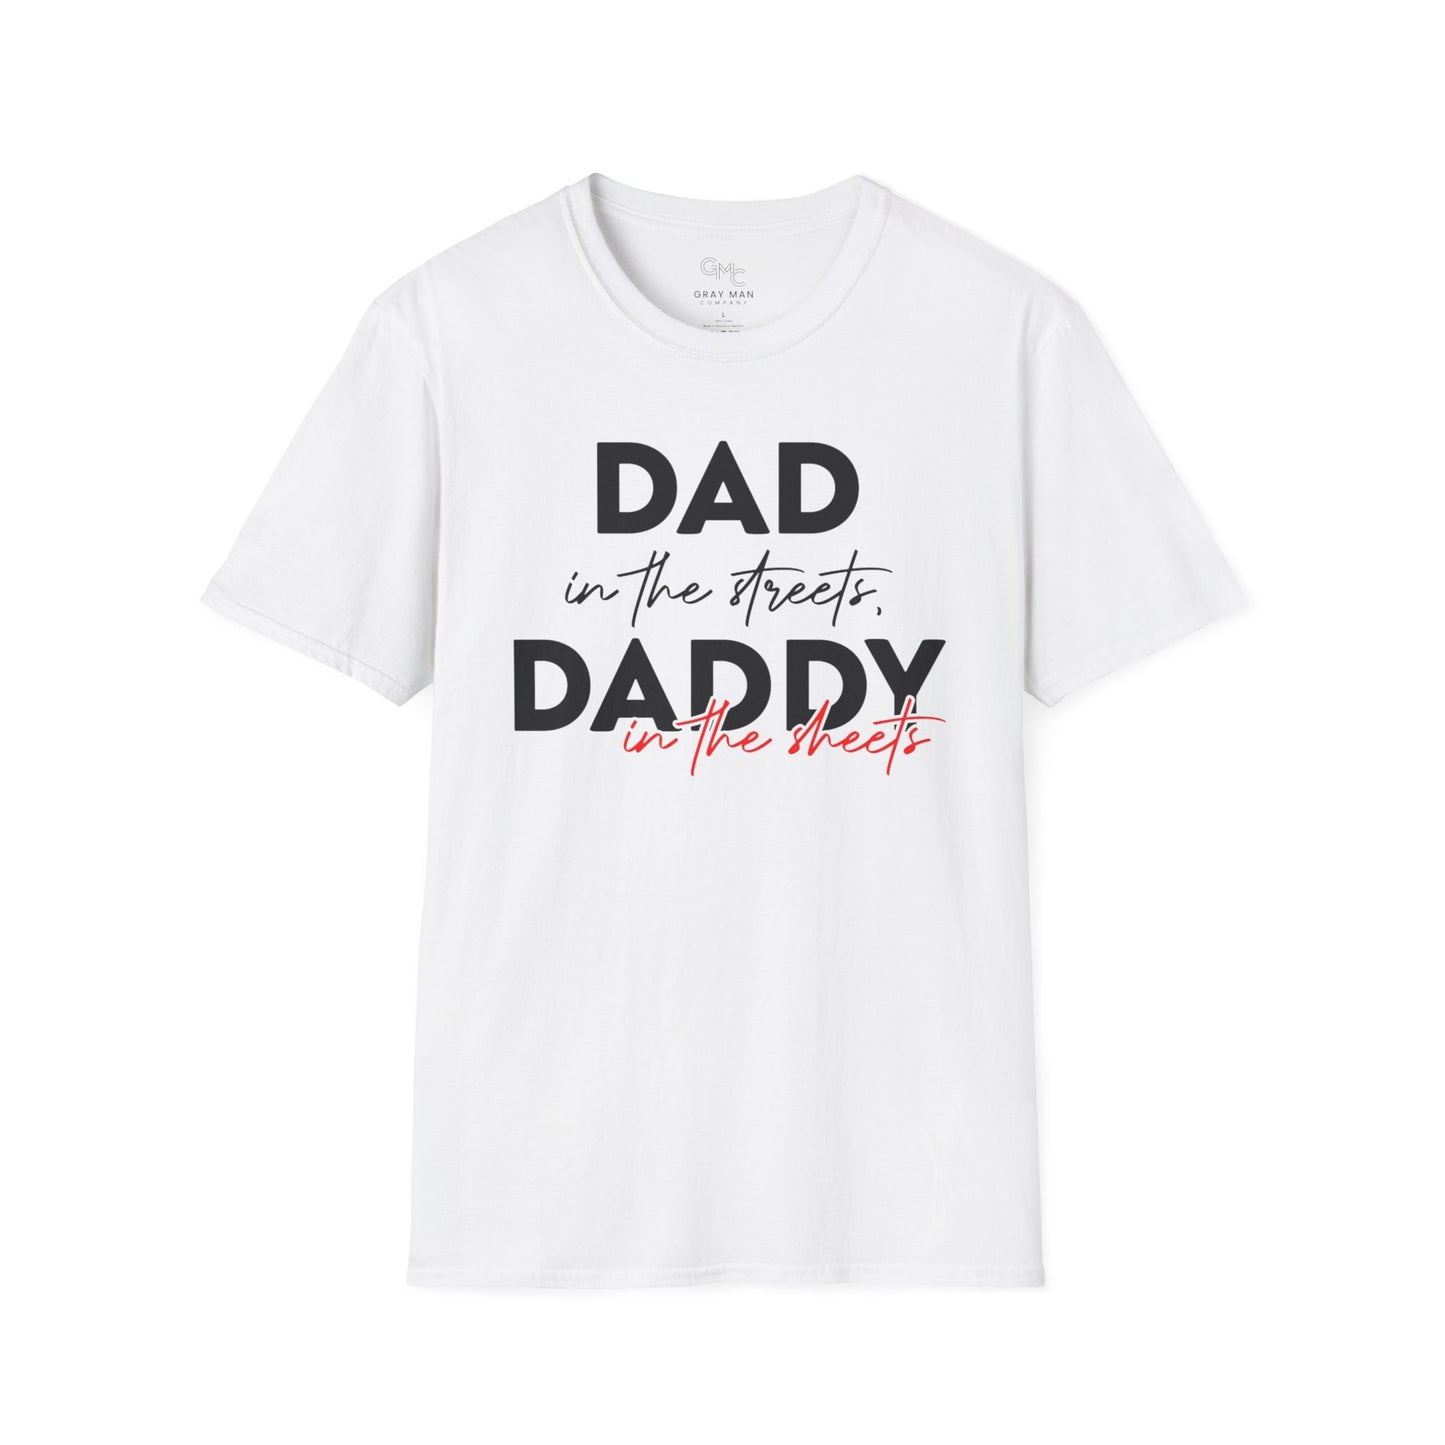 EDC Graphic T-Shirt - DADDY